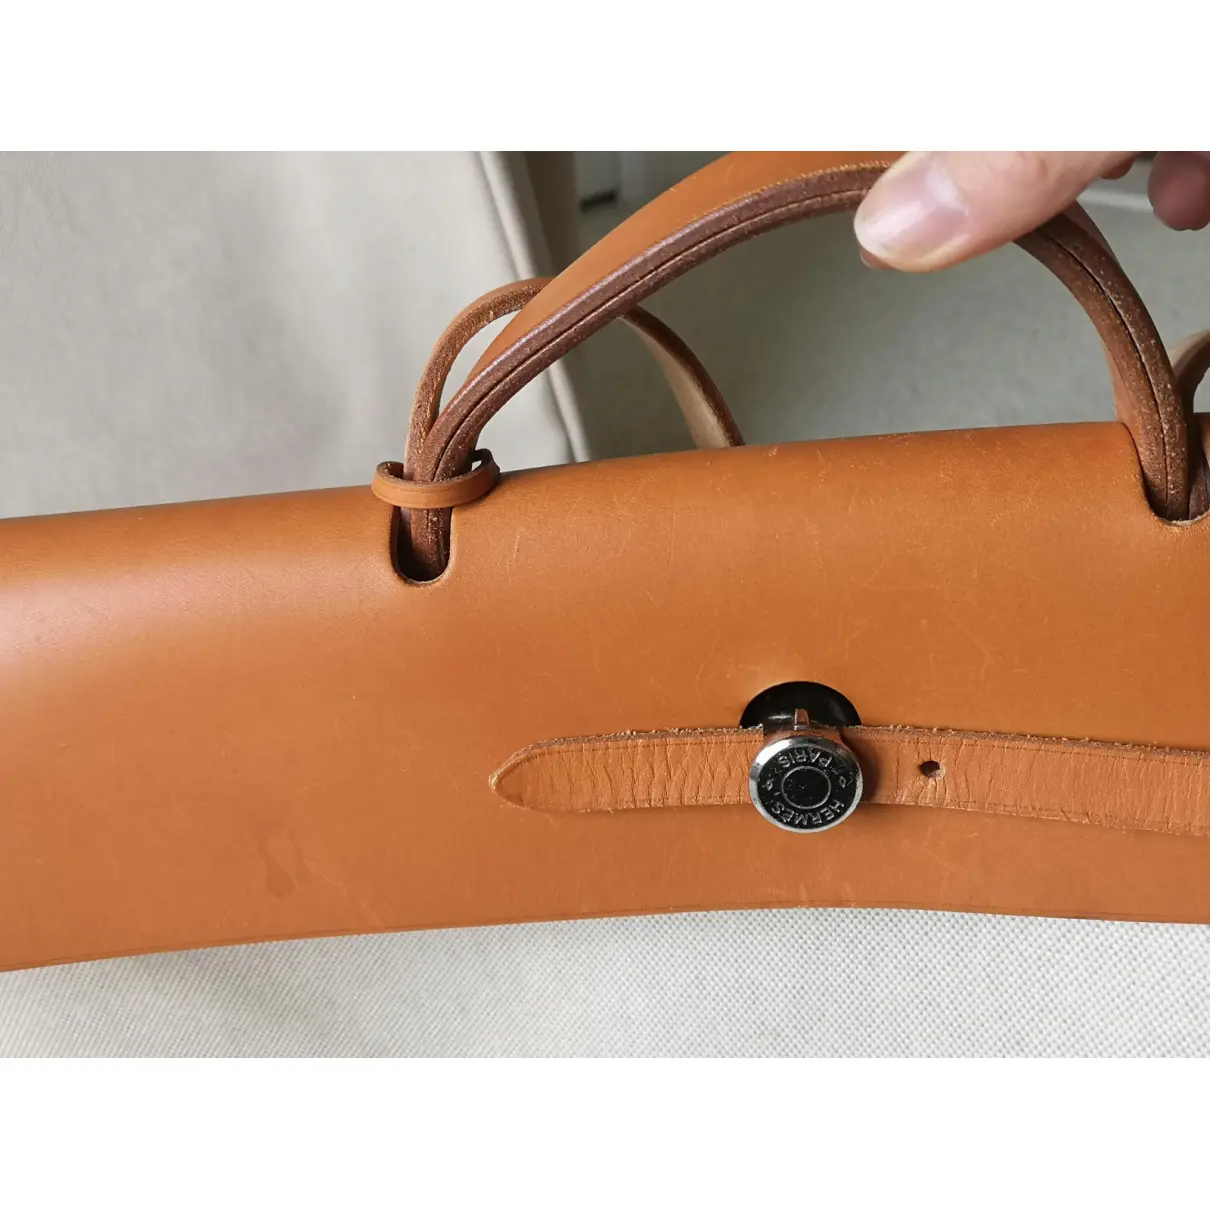 Herbag cloth handbag Hermès